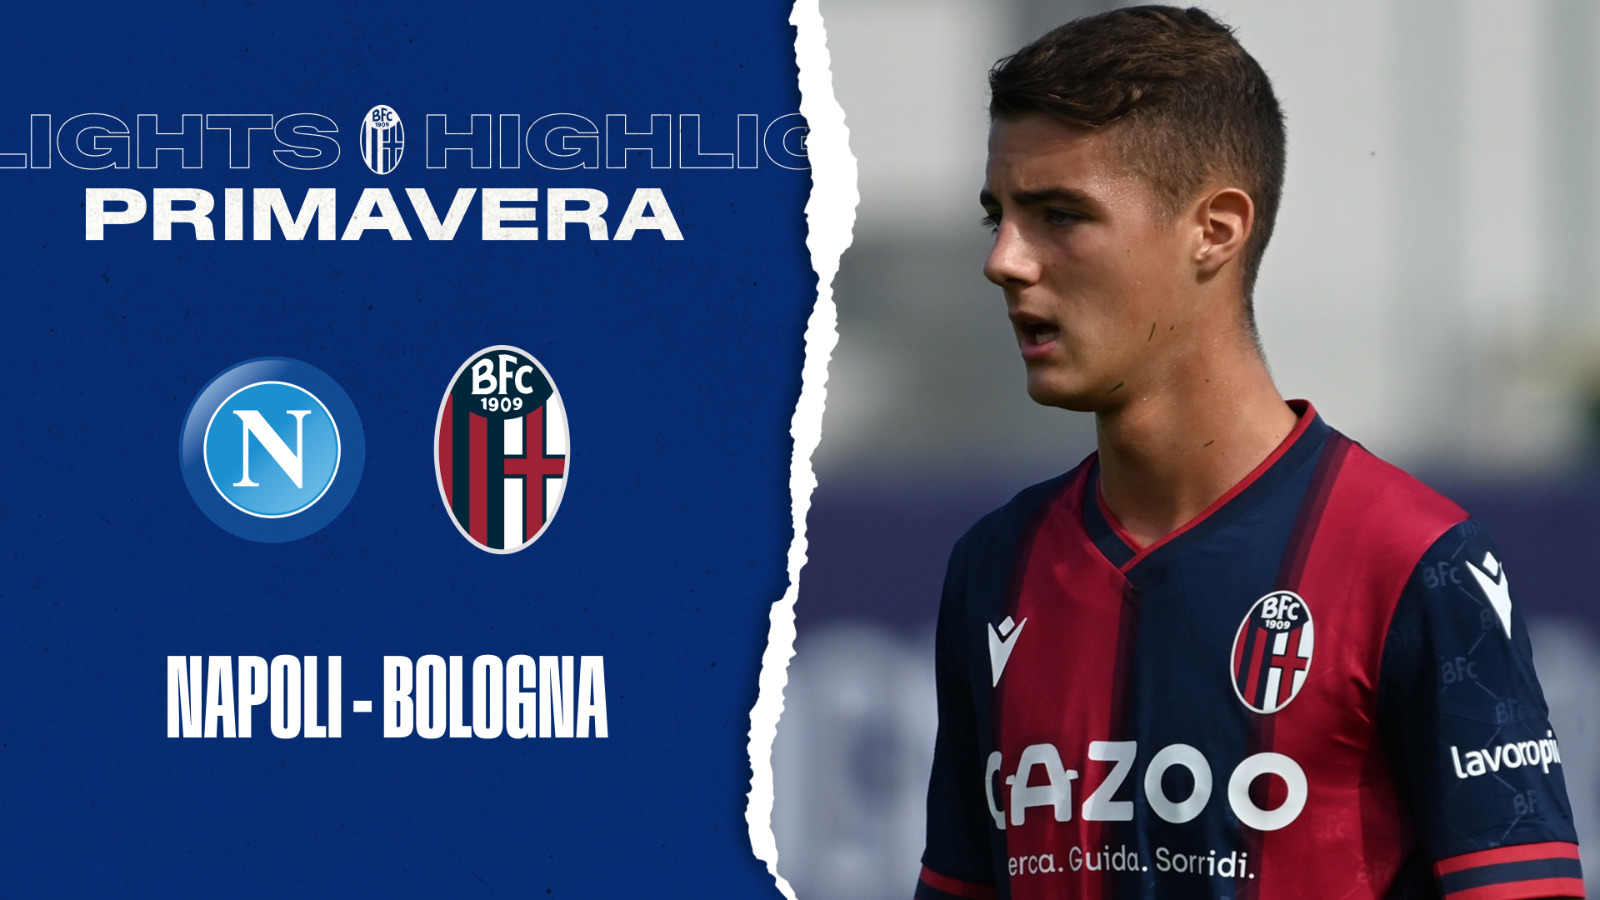 Napoli-Bologna | Highlights | Bolognafc